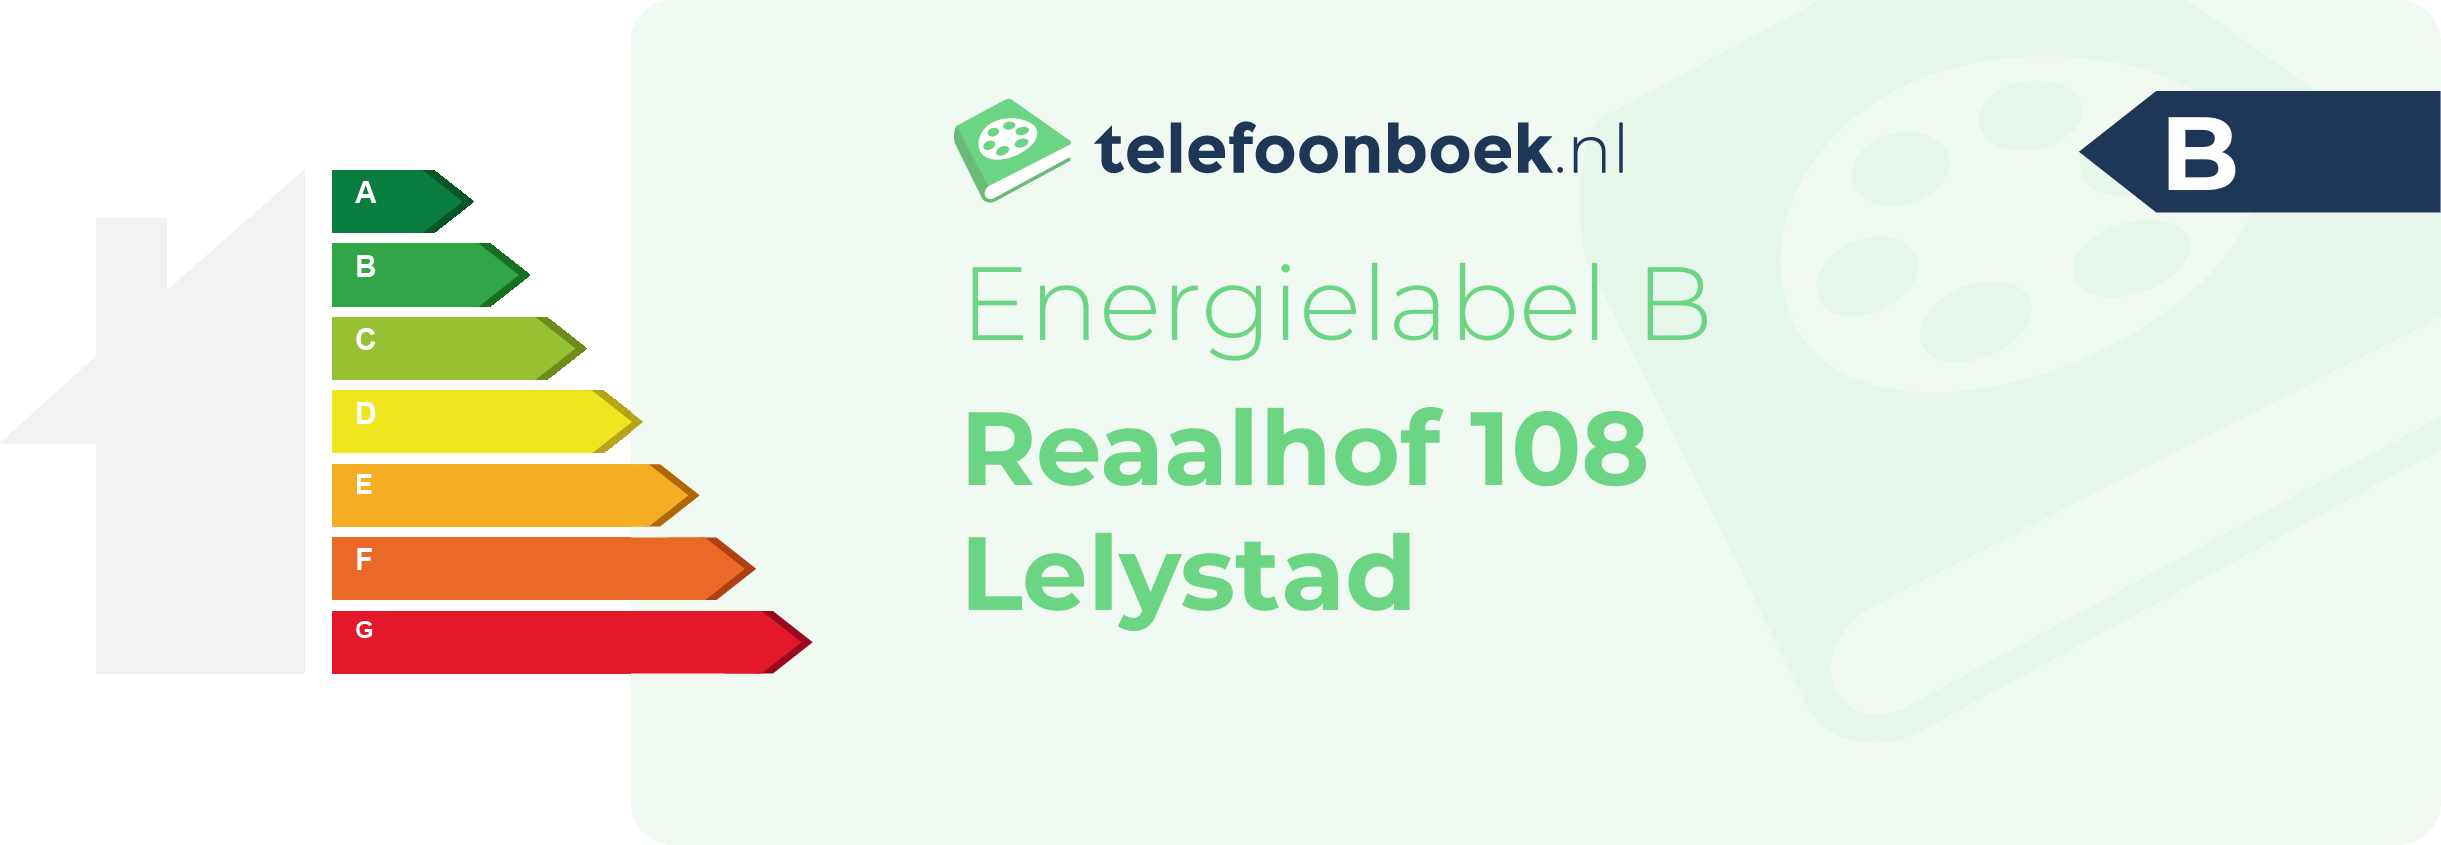 Energielabel Reaalhof 108 Lelystad